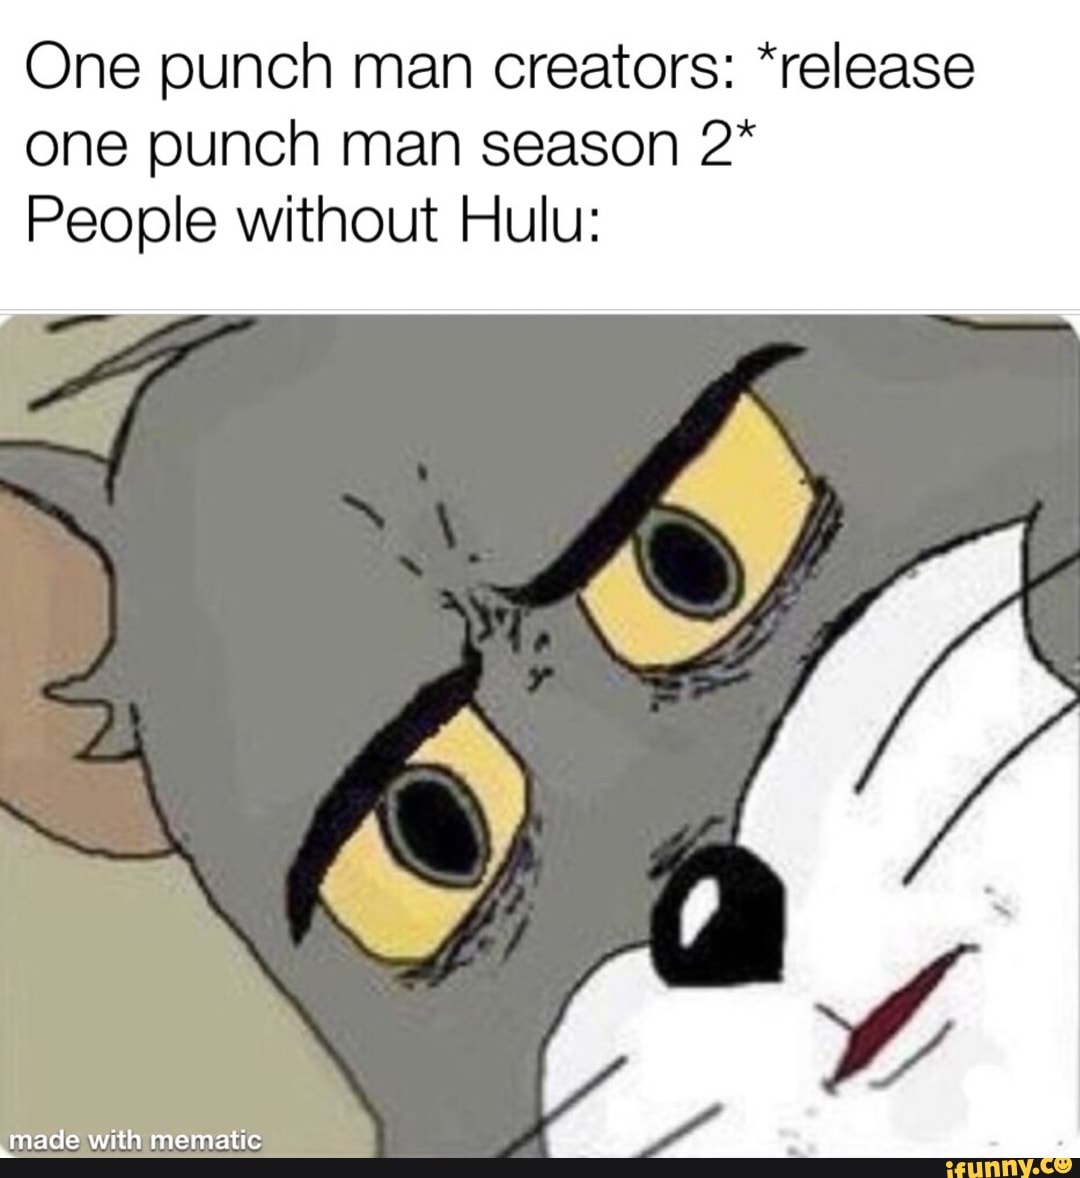 One-Punch Man' Season 2 Coming to Hulu